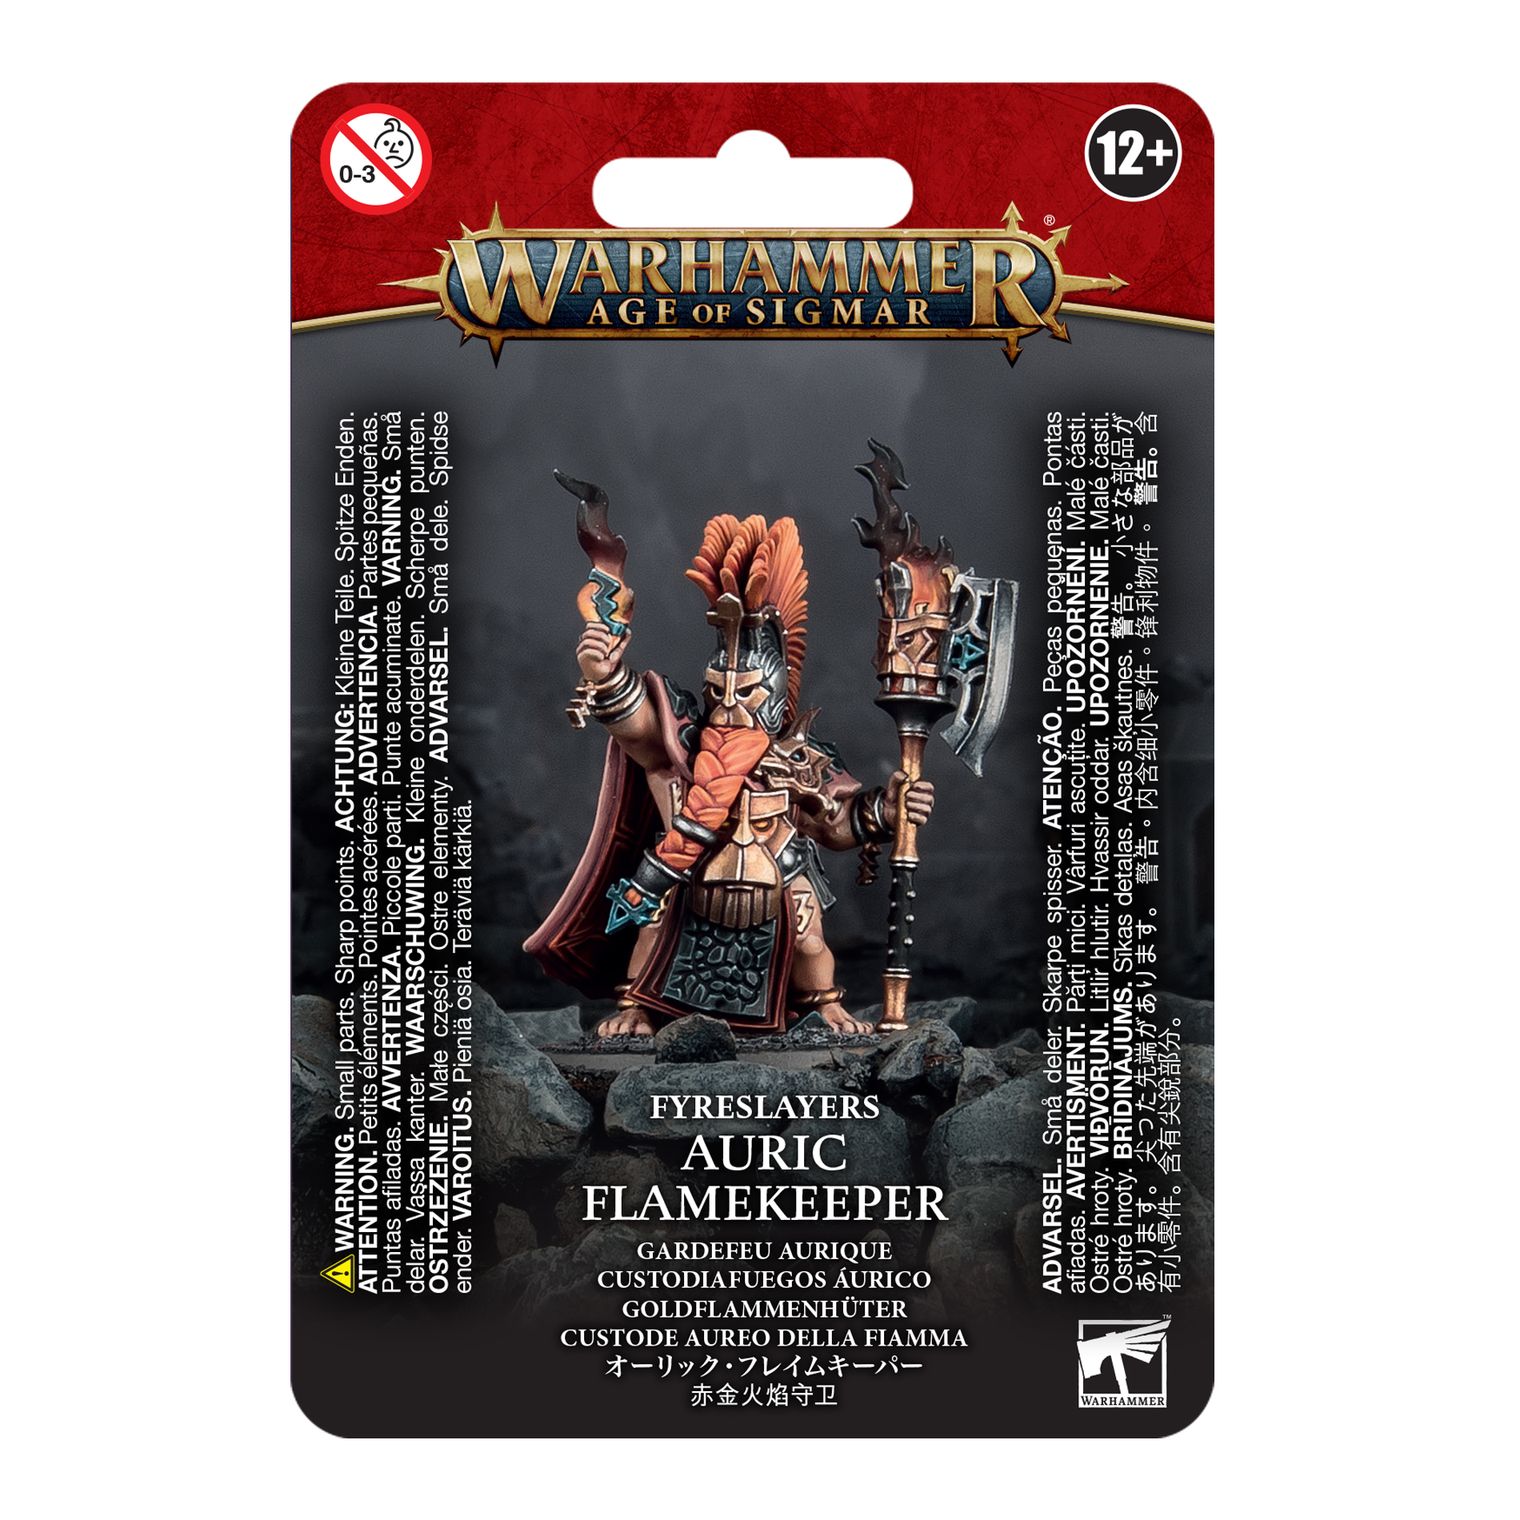 Afbeelding van het spelletje Warhammer: Age of Sigmar - Fyreslayers: Auric Flamekeeper